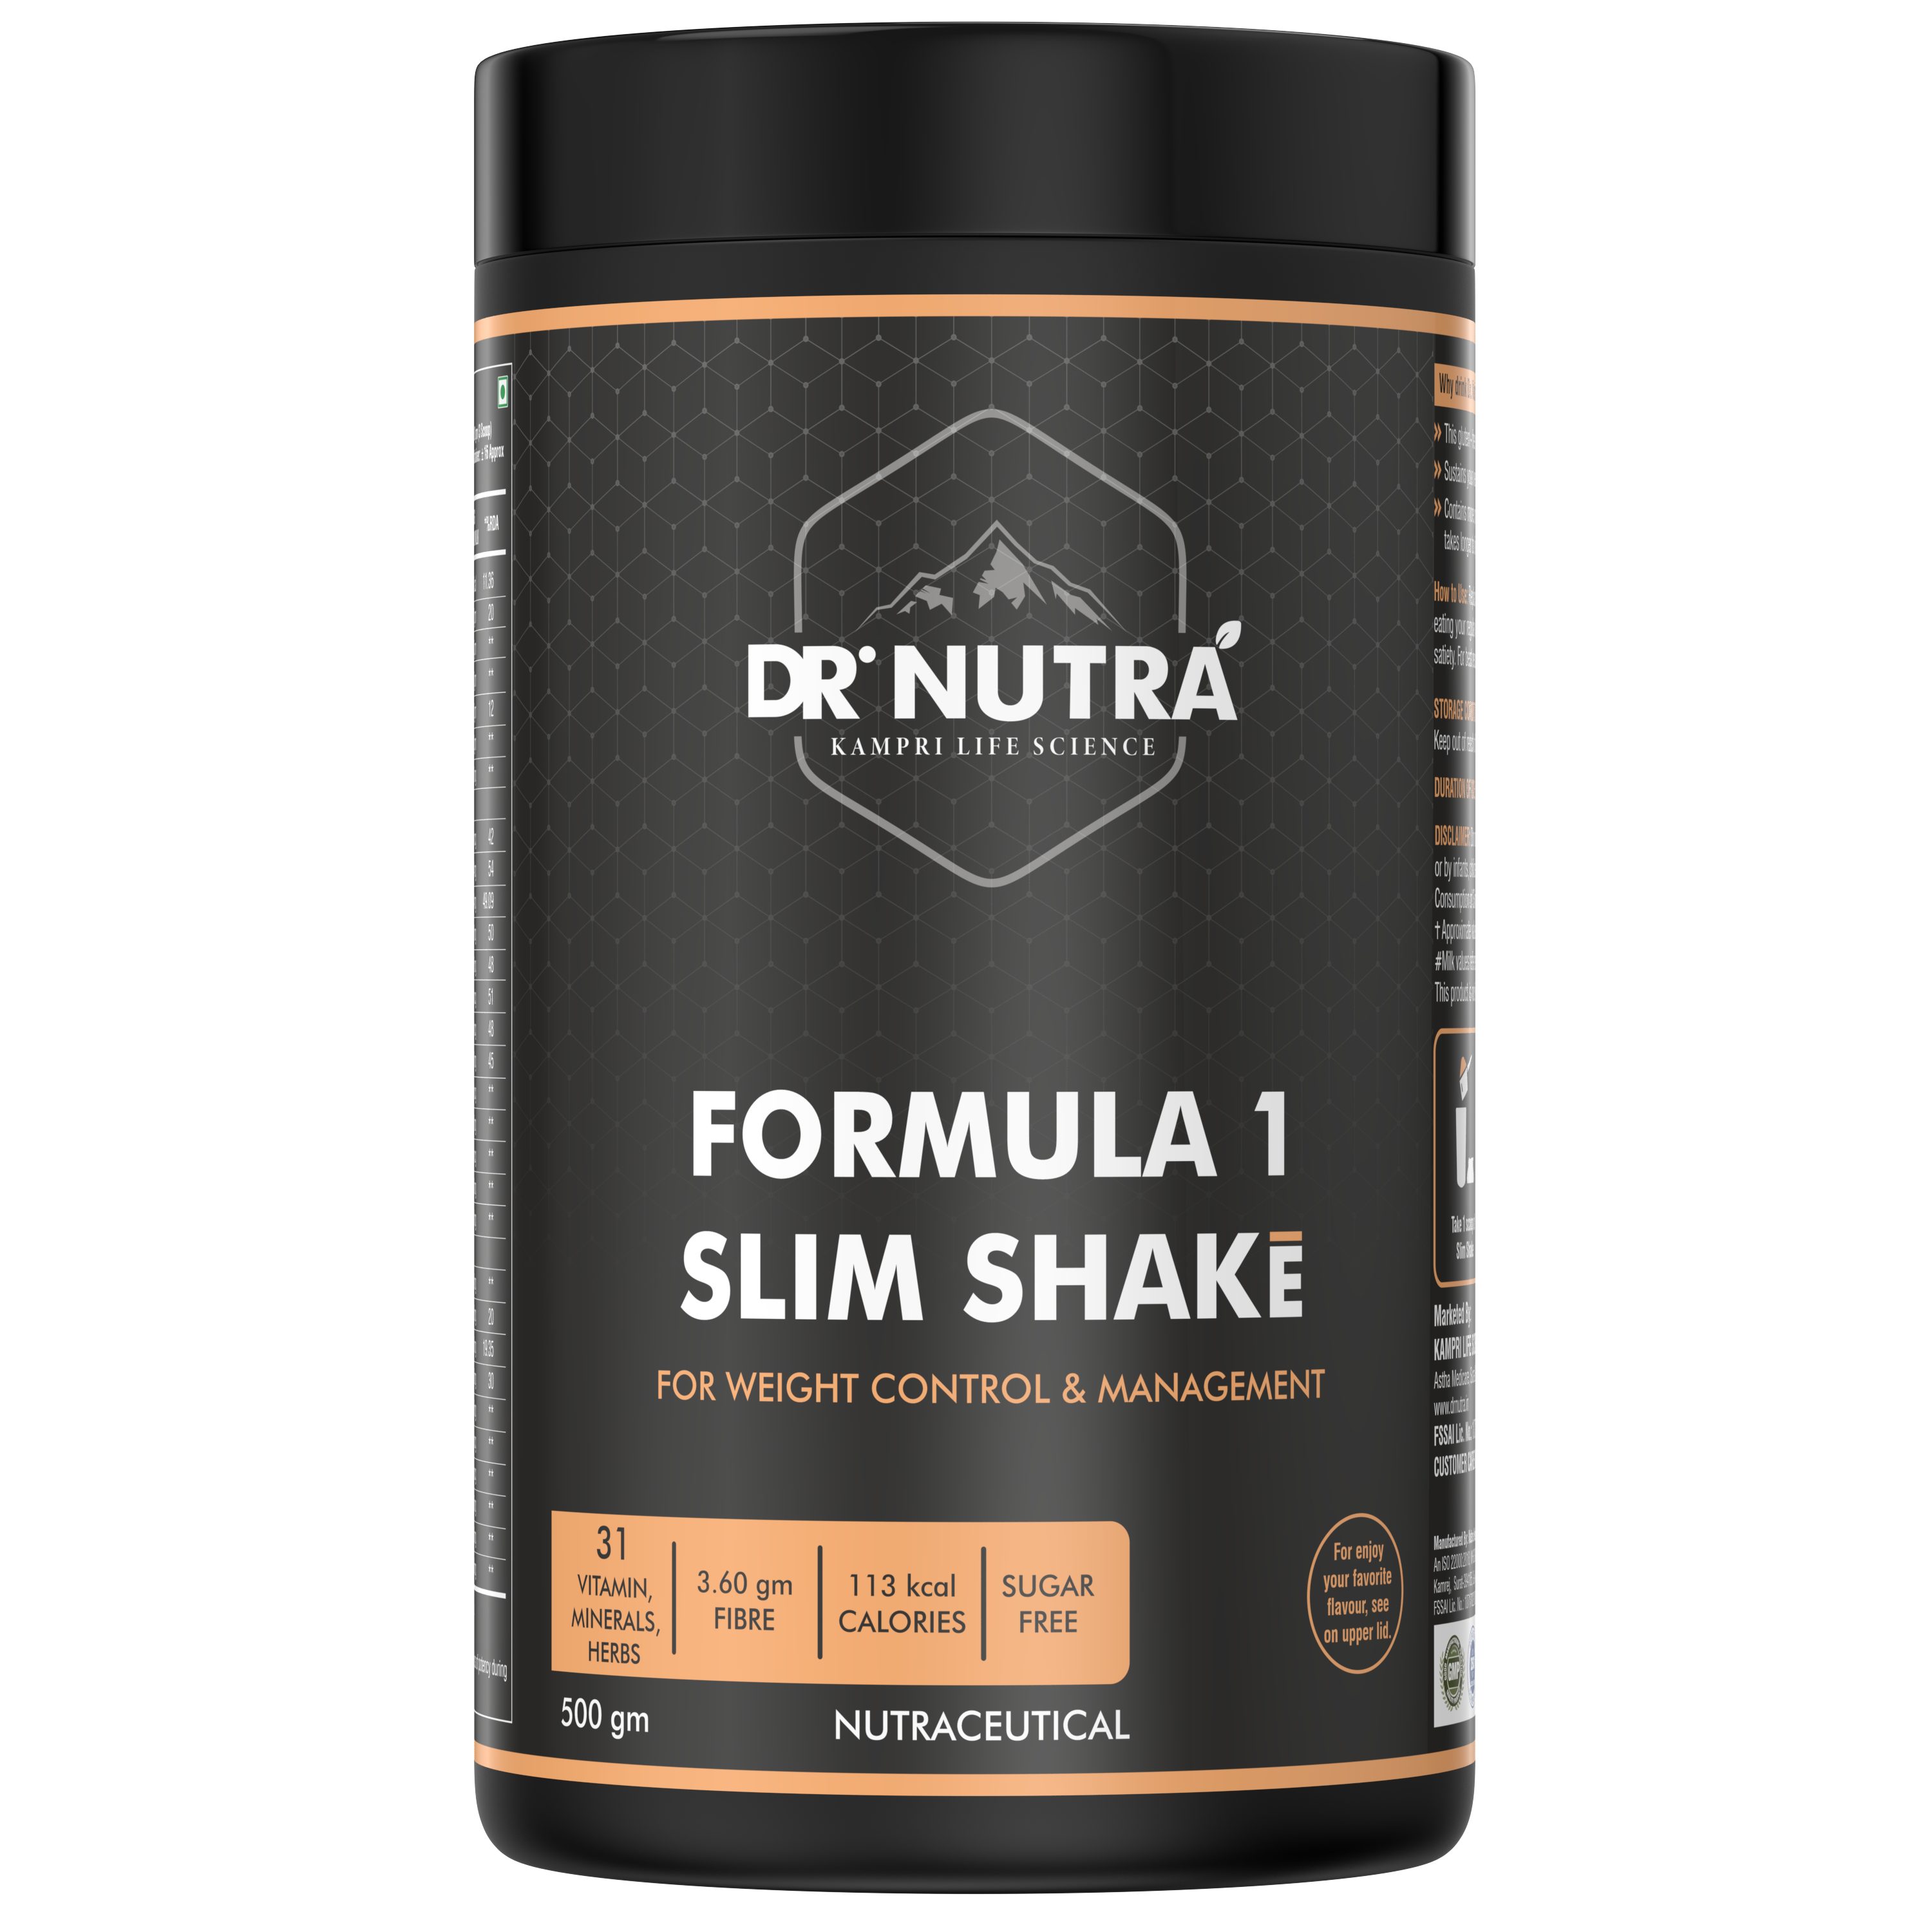 Shape Slim Shake Proteico 400g - Nutrawell